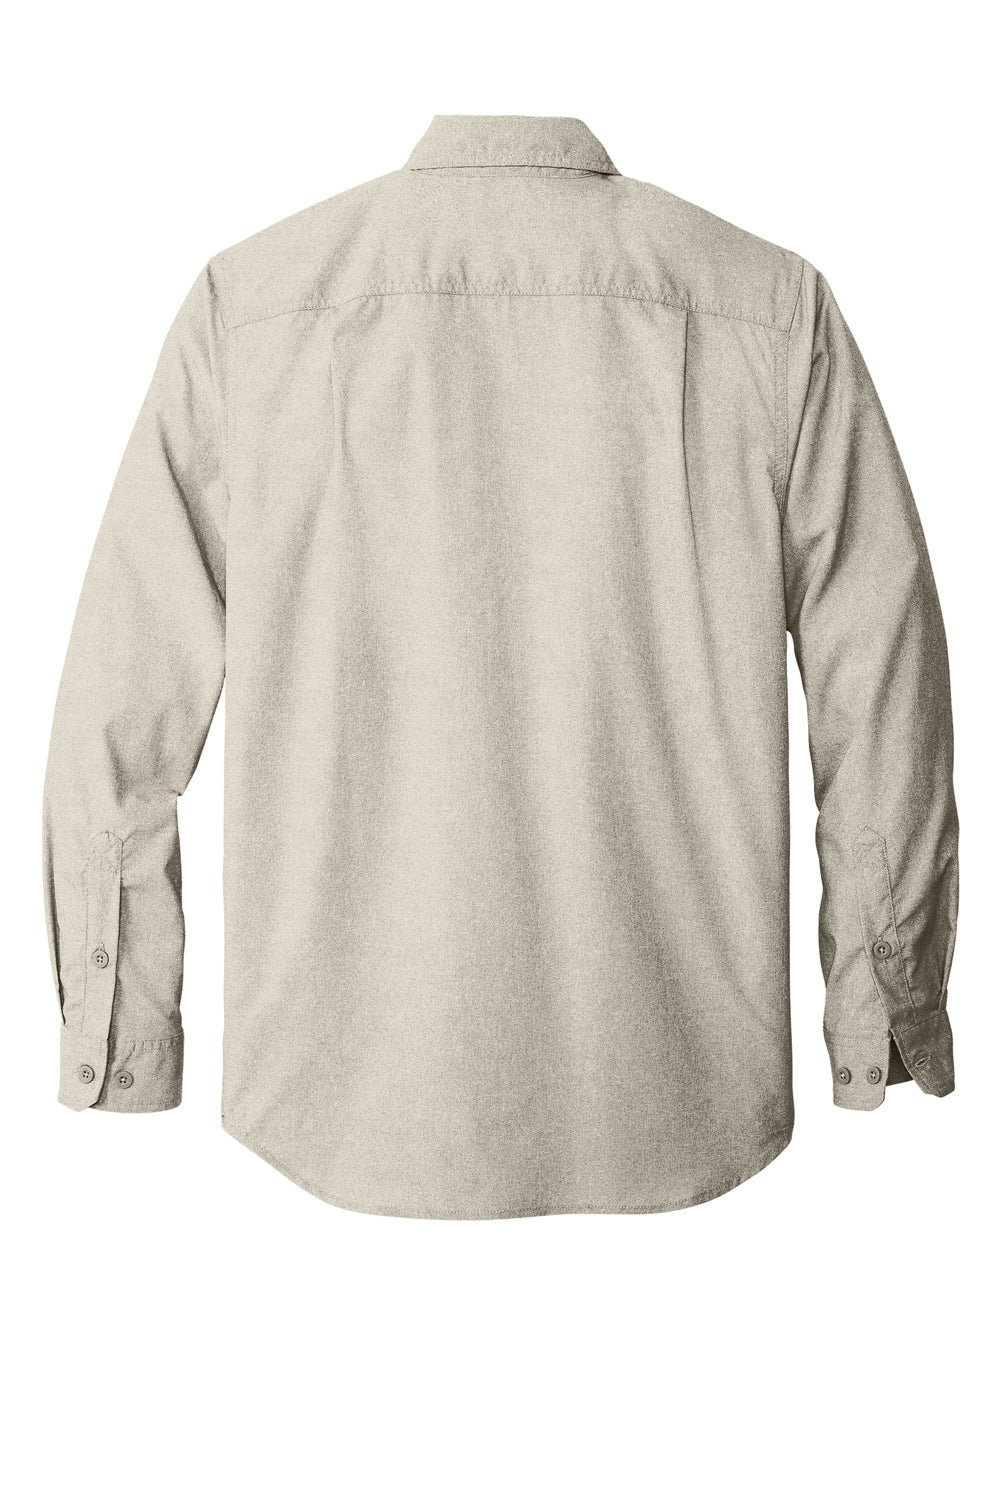 Carhartt CT105291 Mens Force Moisture Wicking Long Sleeve Button Down Shirt w/ Double Pockets Steel Grey Flat Back